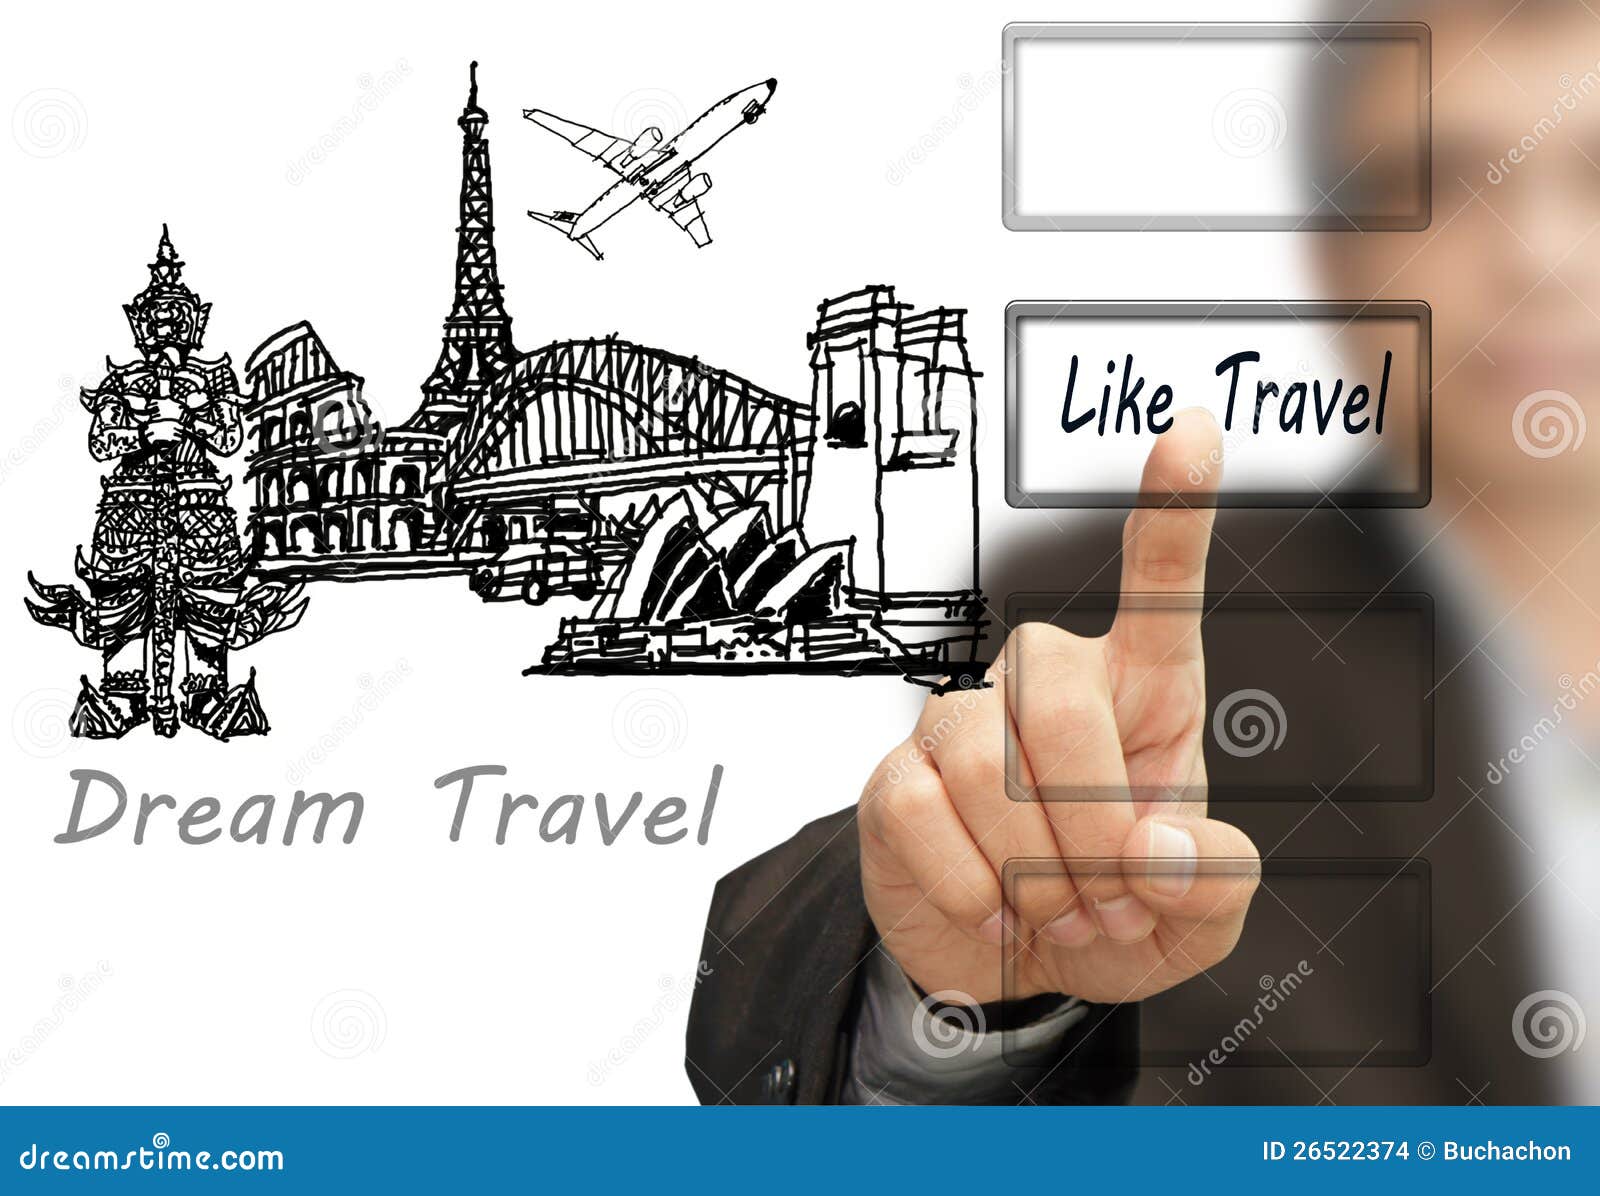 Travel like 12. Like&Travel. Like Travel франшиза. Samo Travel. Dream Travel.